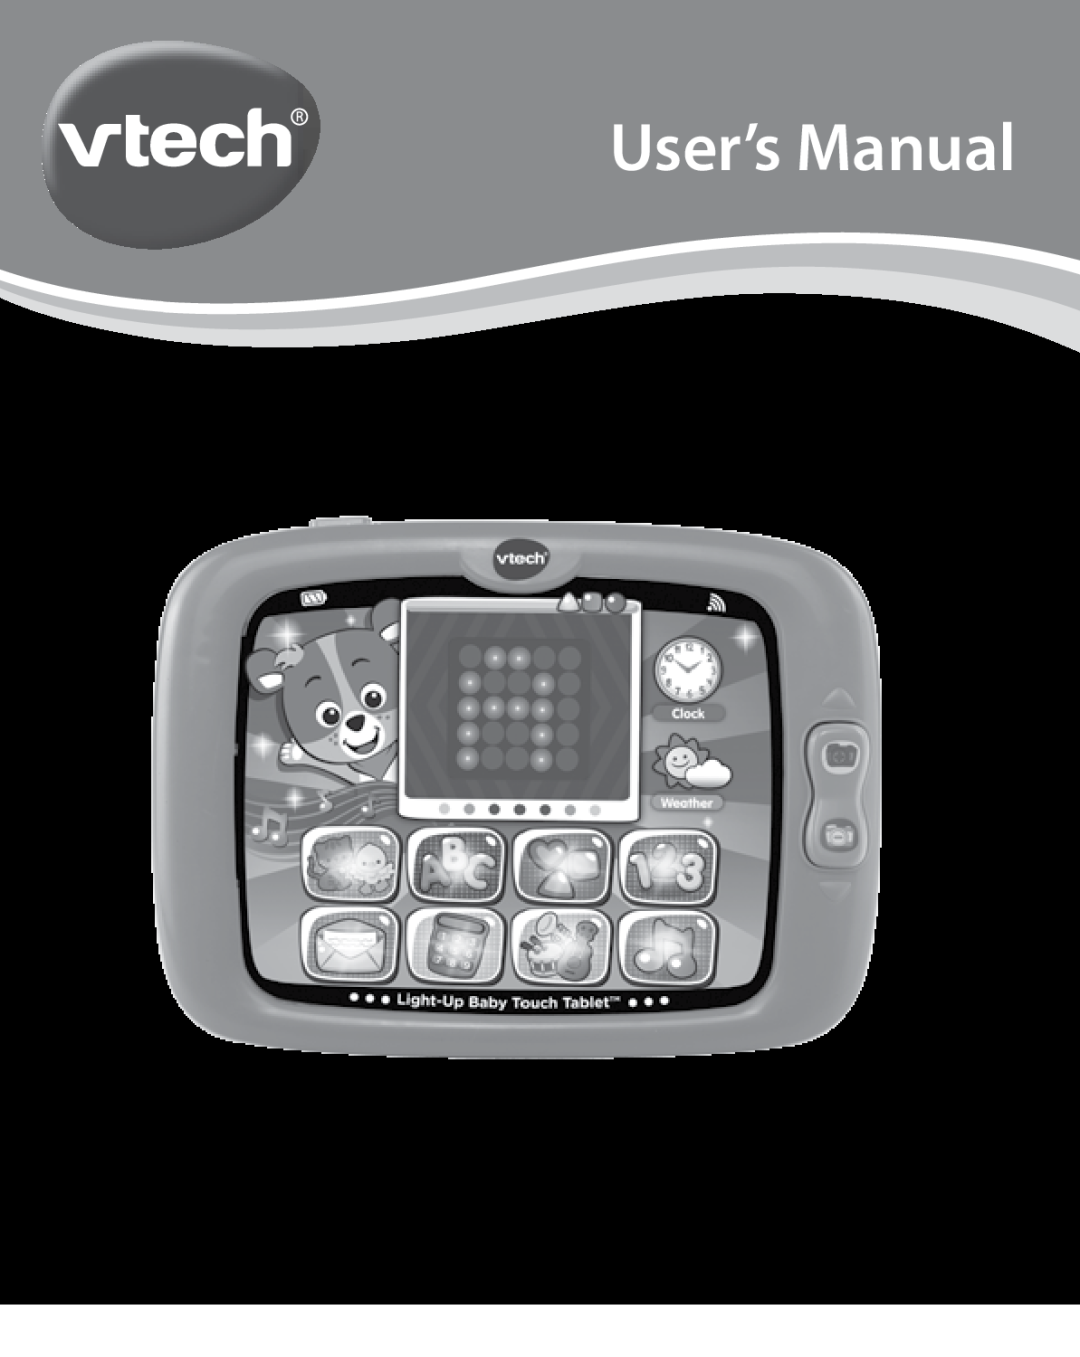 VTech vtech light-up baby touch tablet user manual User’s Manual, Light-Up Baby Touch Tablet, 91-002910-000 